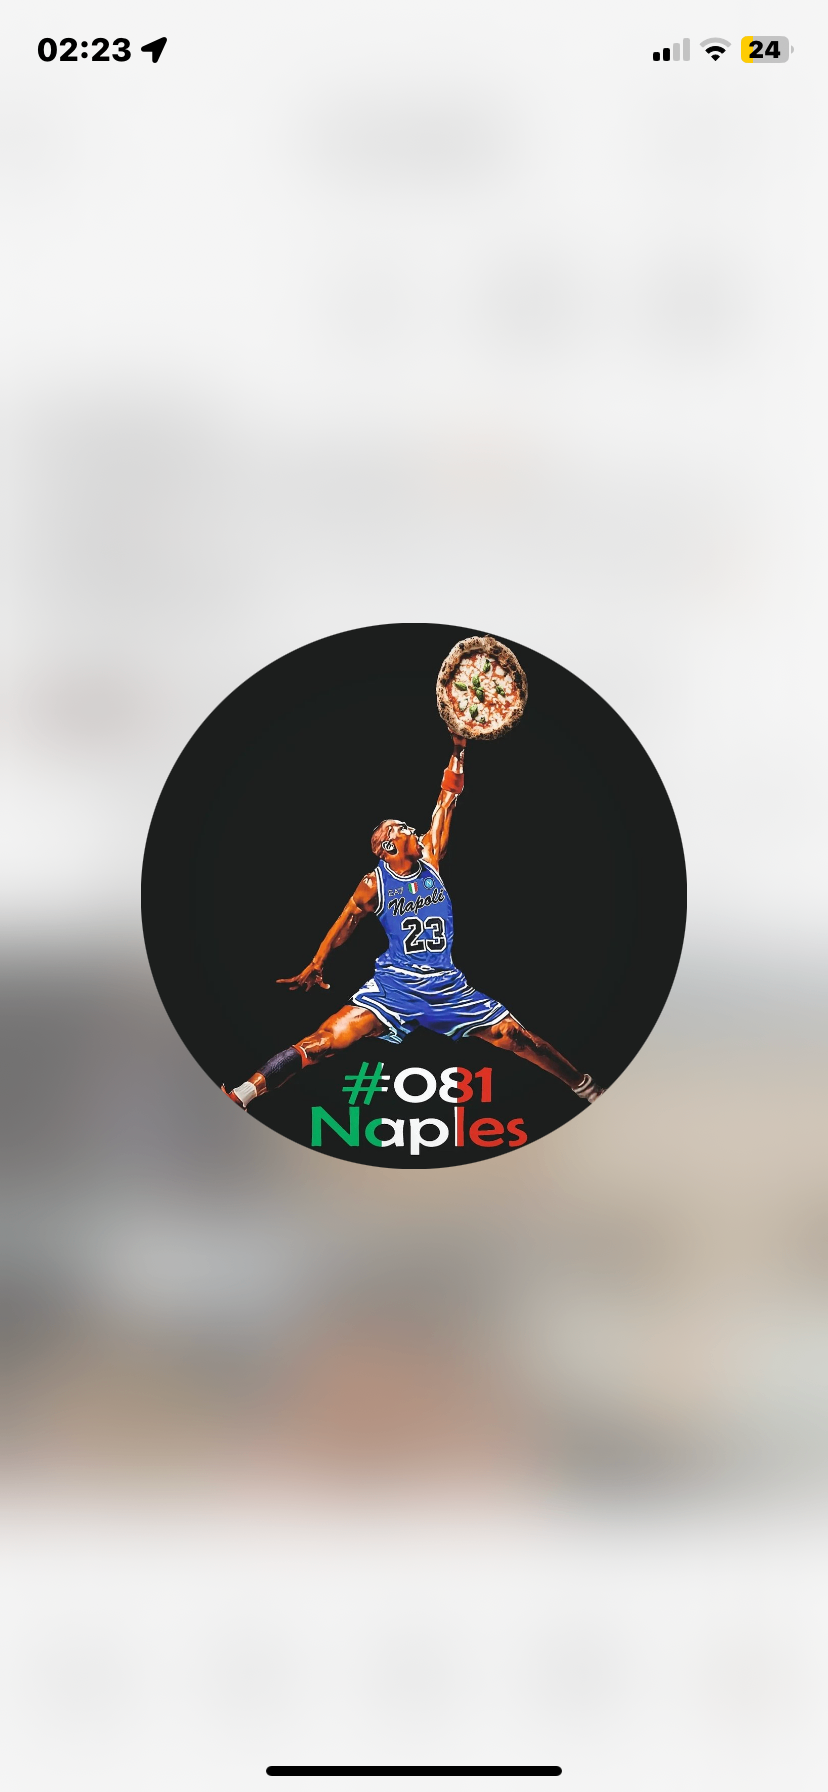 Logo #081#naples